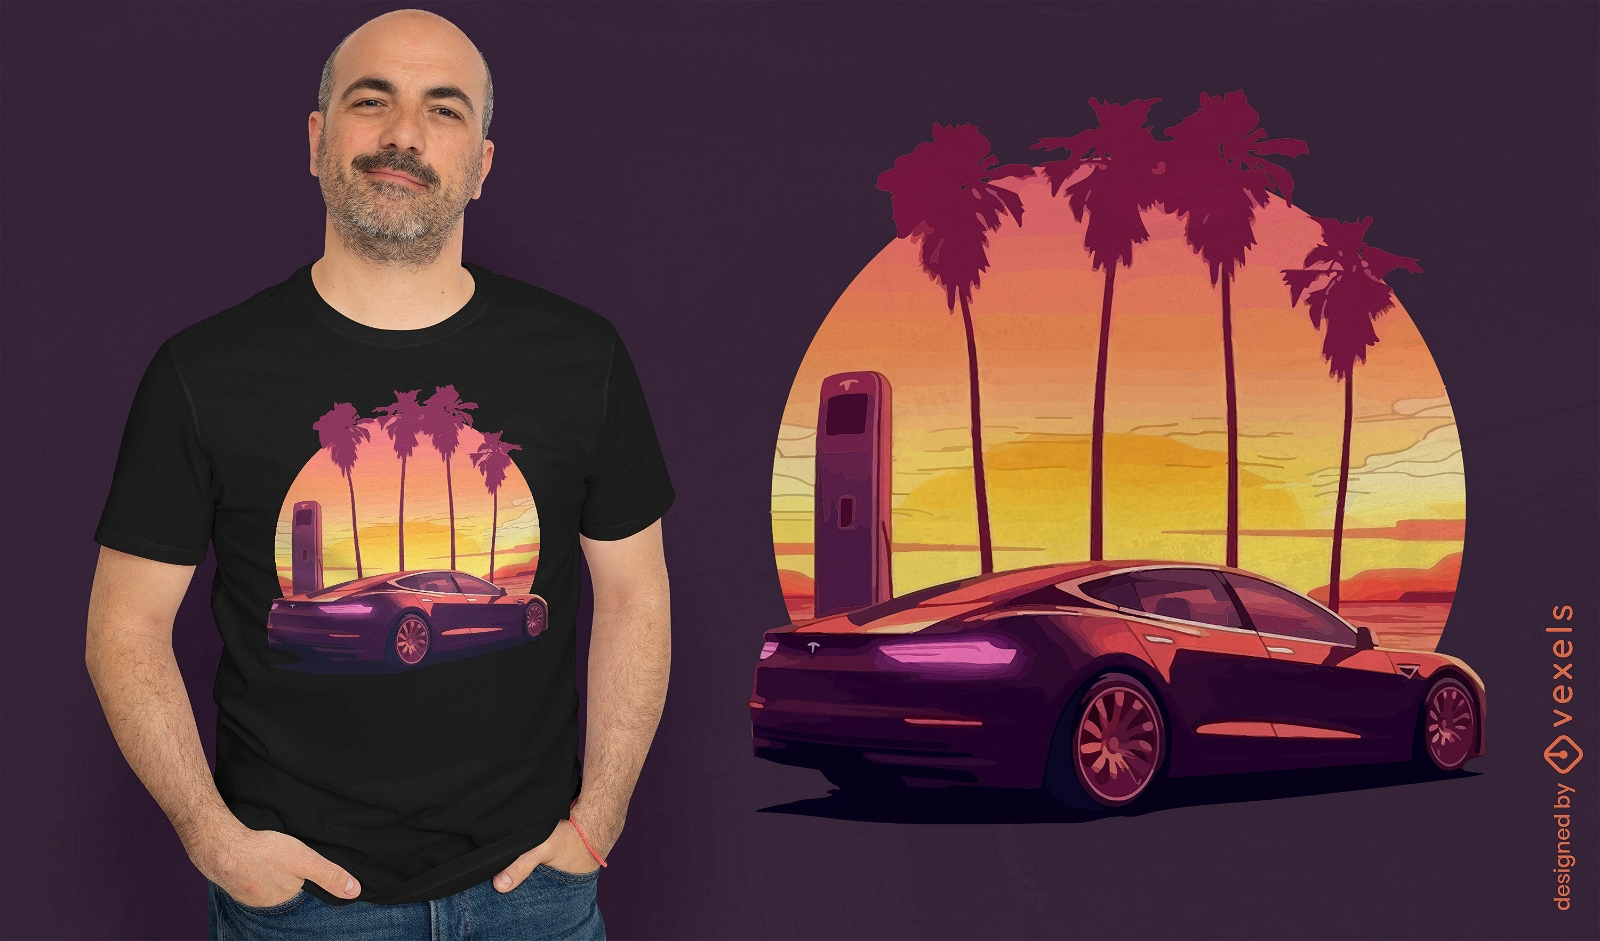 Design de camiseta por do sol neon de carro elétrico